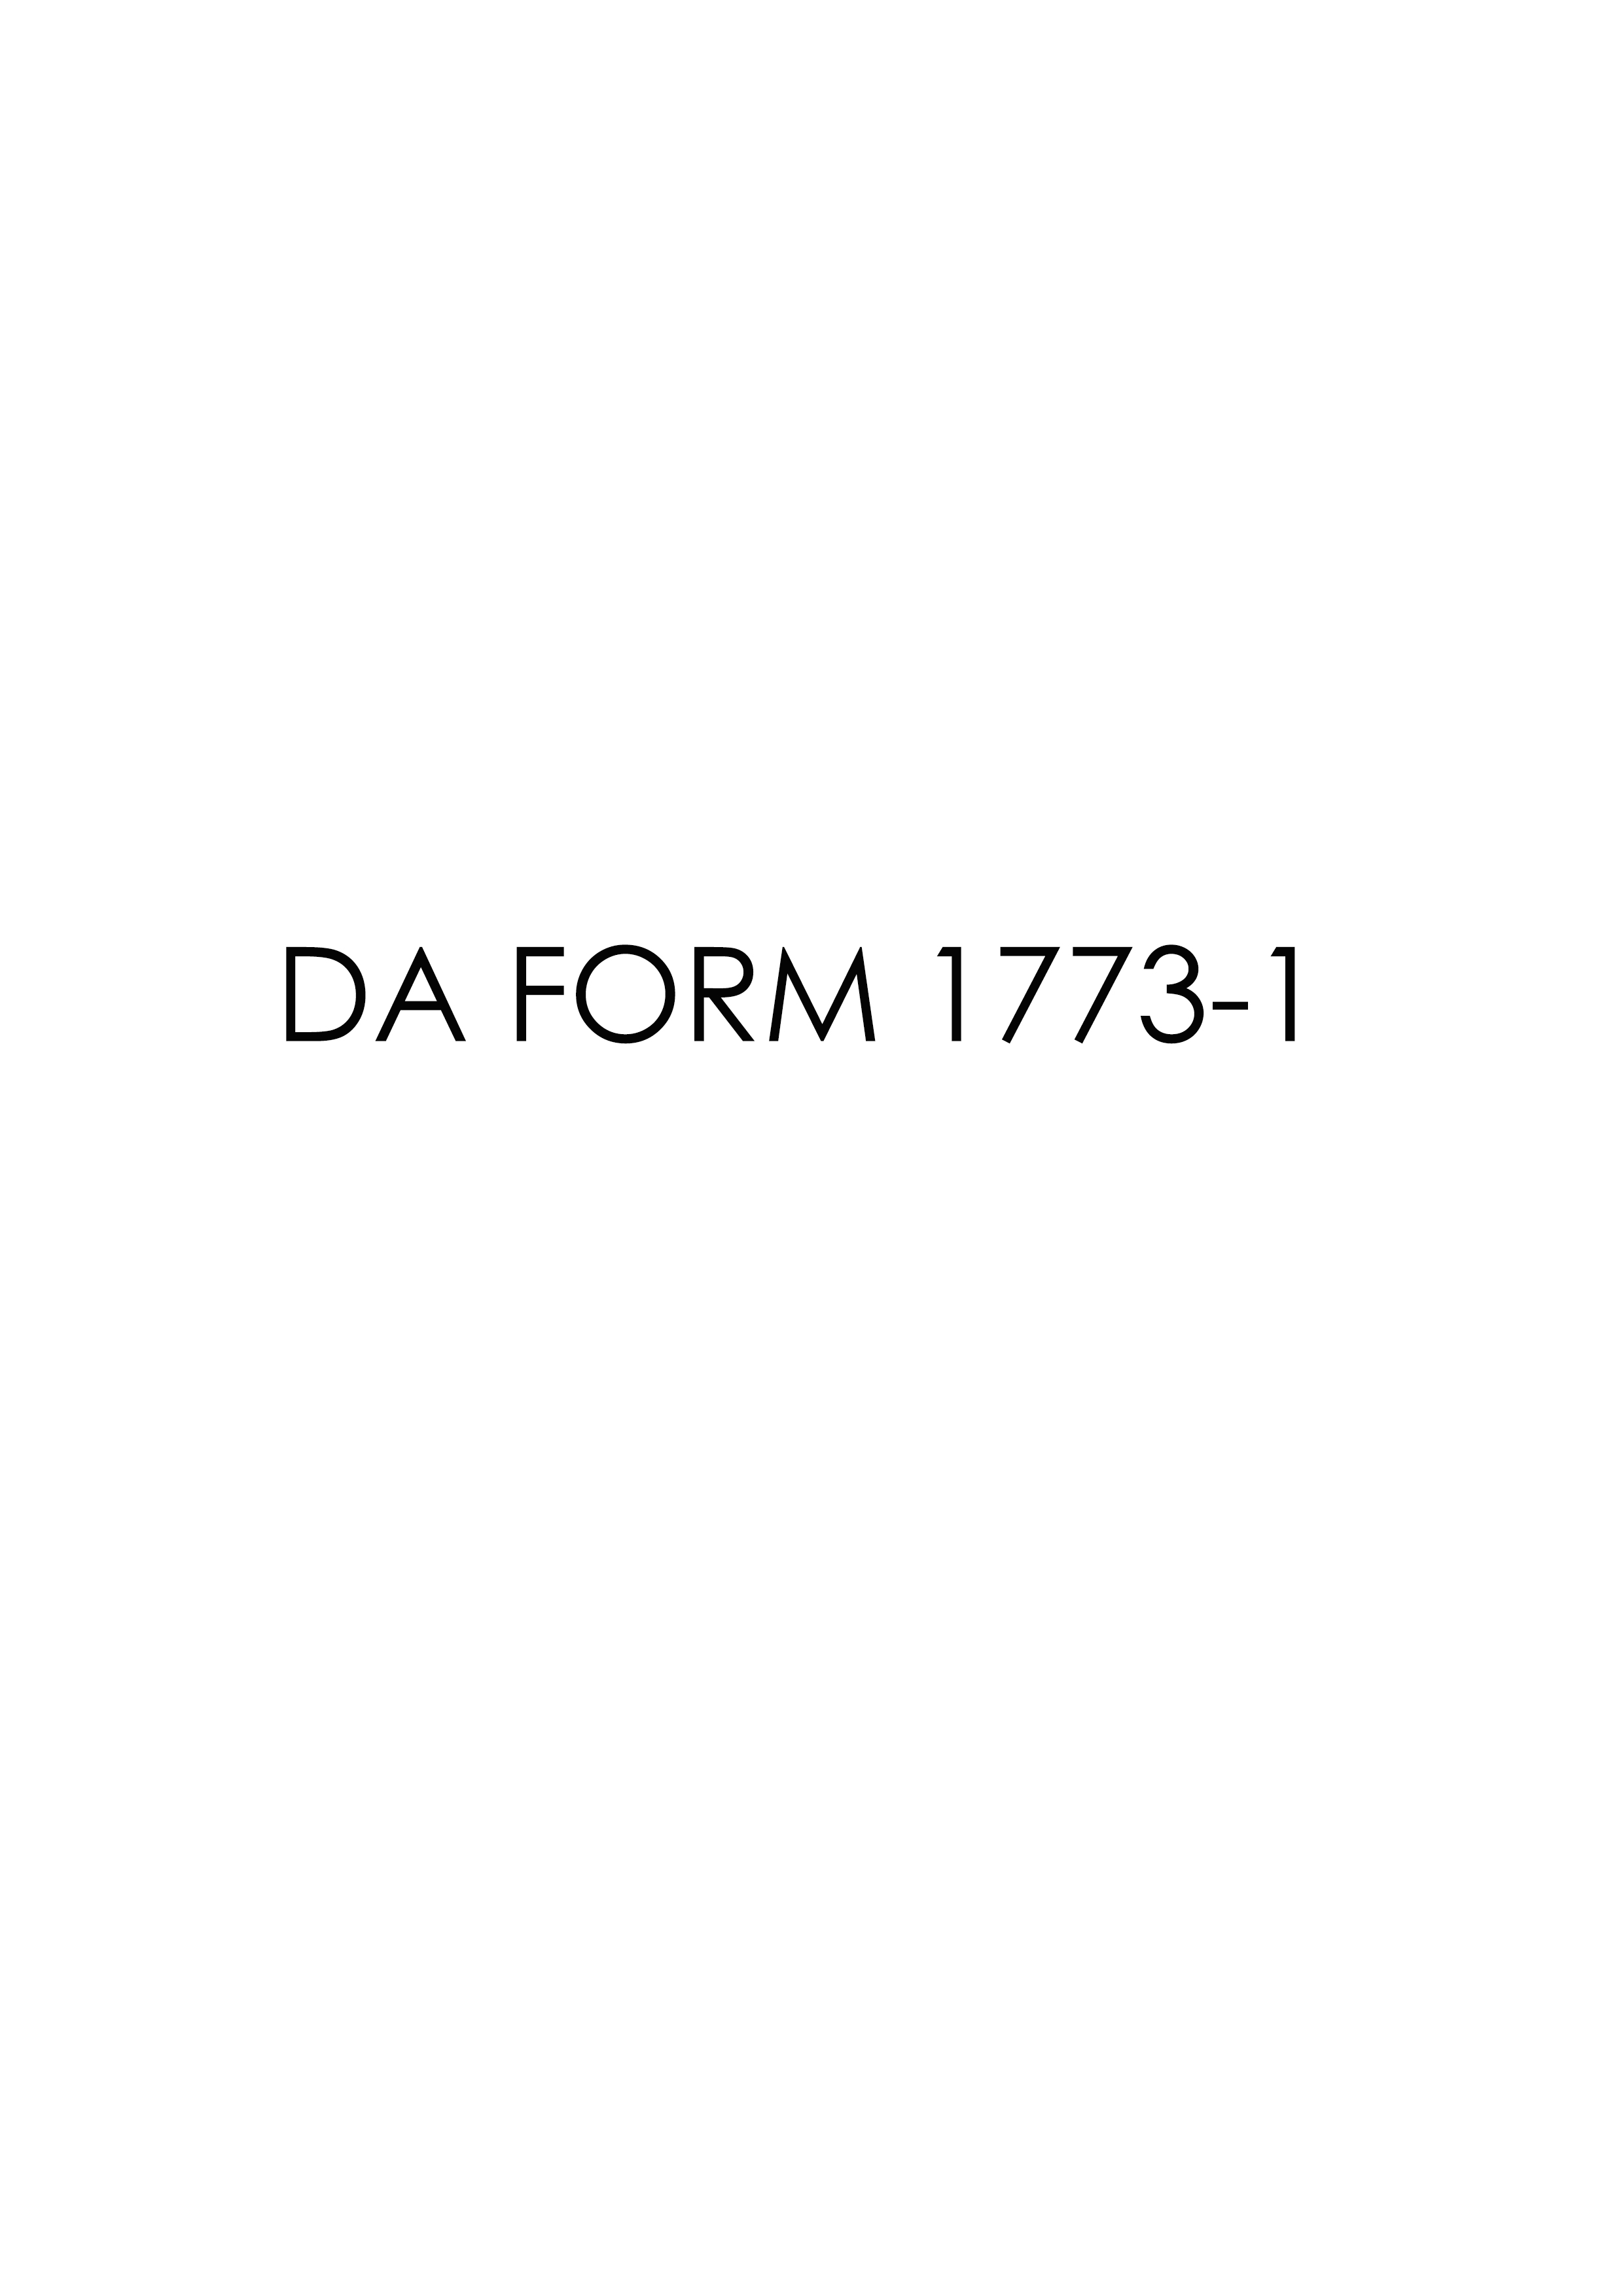 Download da 1773-1 Form Free